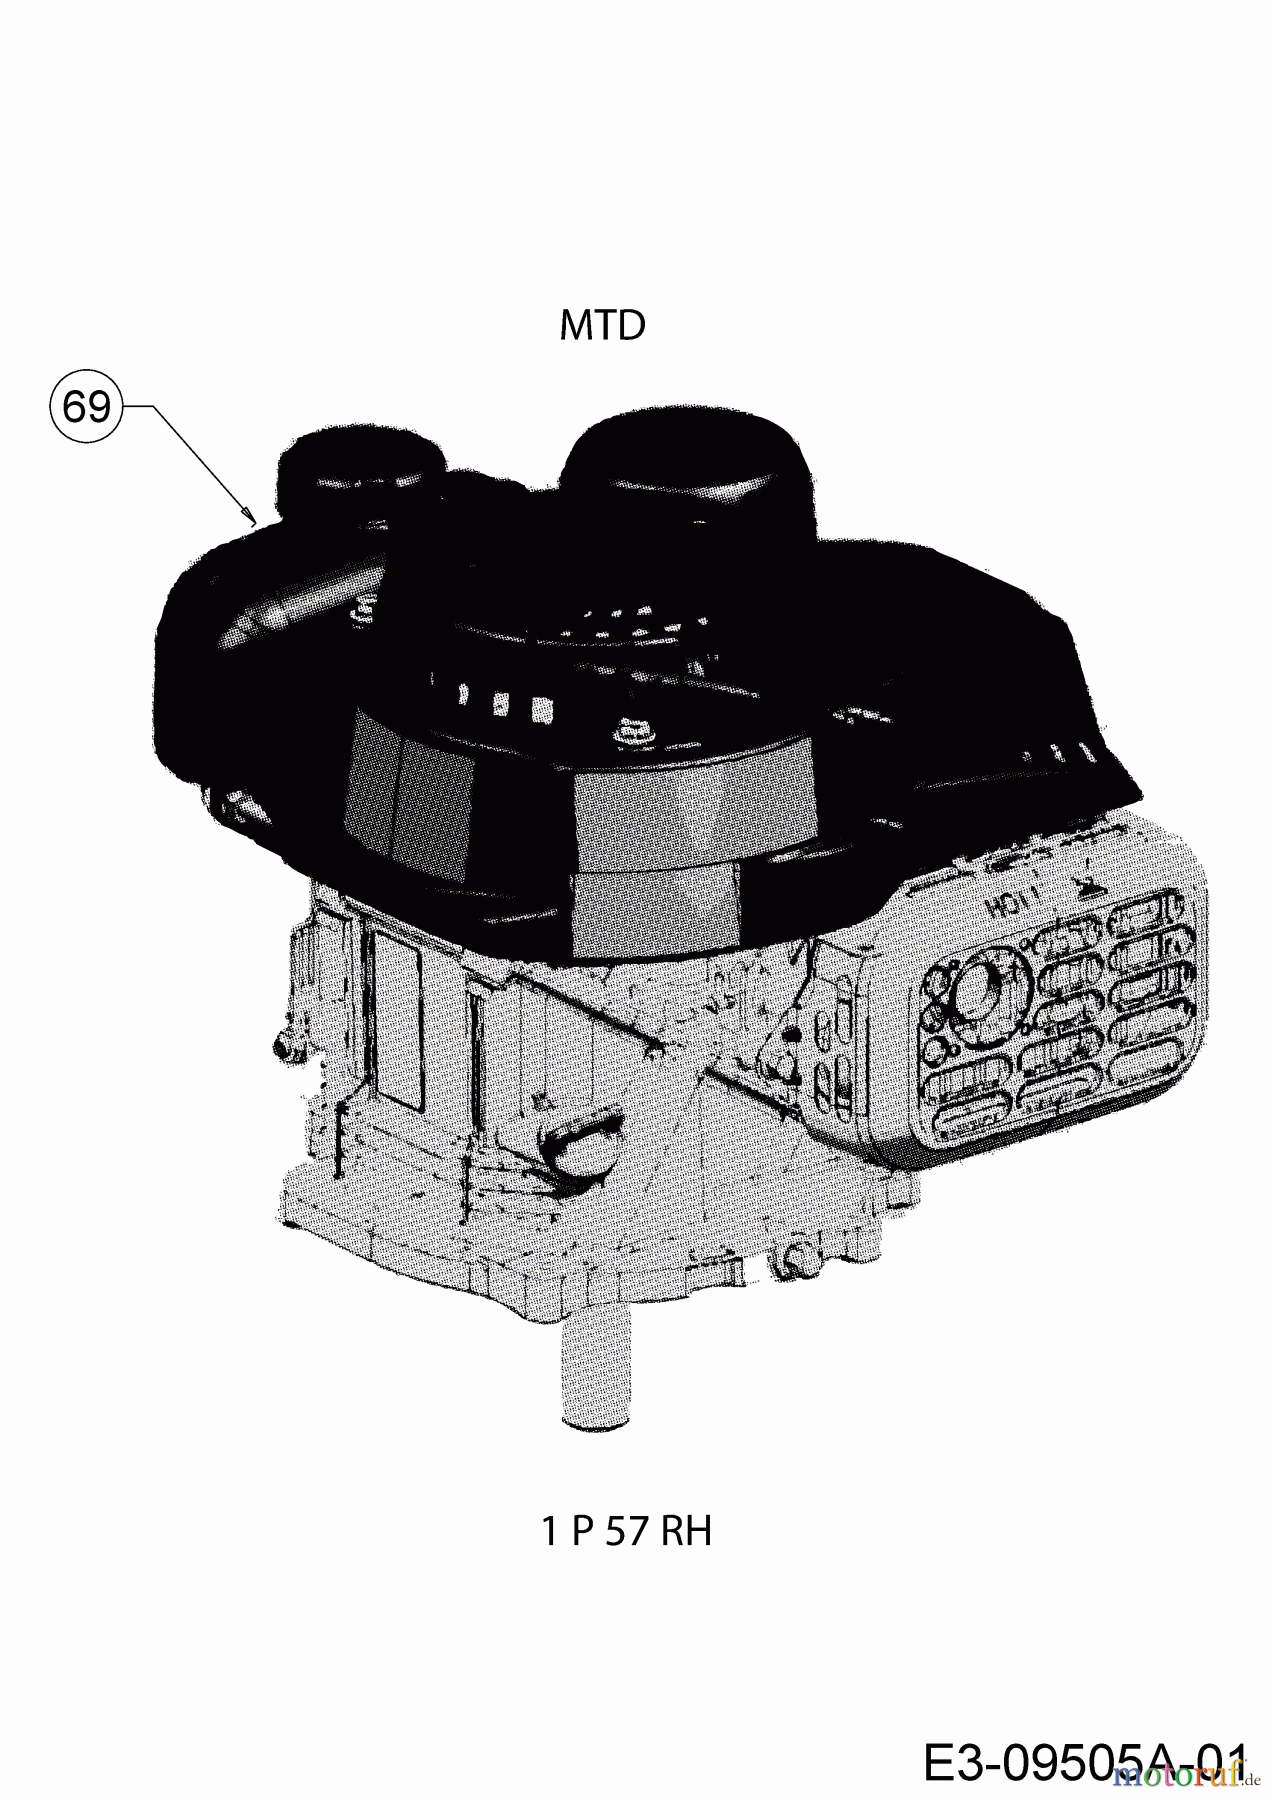  Cub Cadet Motormäher mit Antrieb LM1 AR42 12A-LQSJ603  (2017) Motor MTD